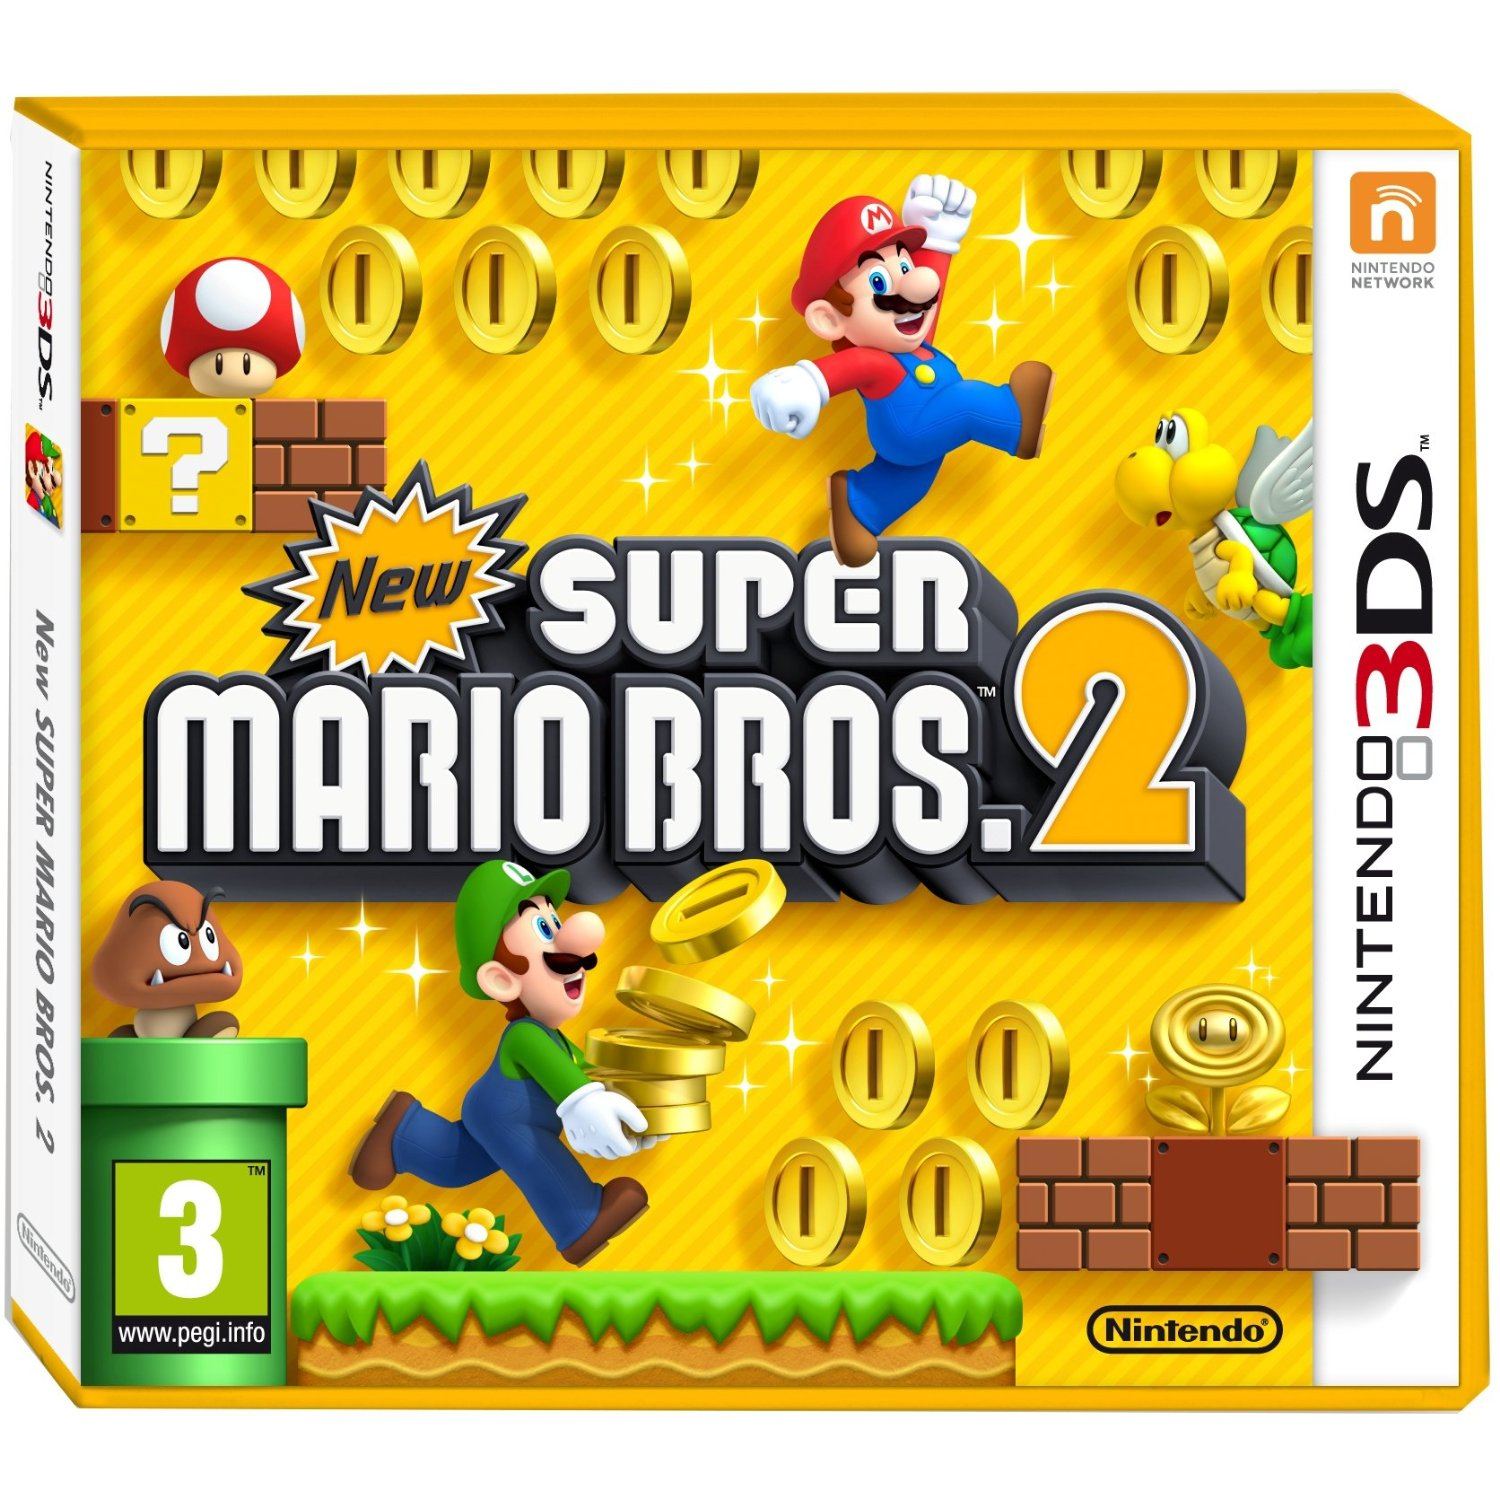 Super for Nintendo 3DS Bros. 2 New Mario